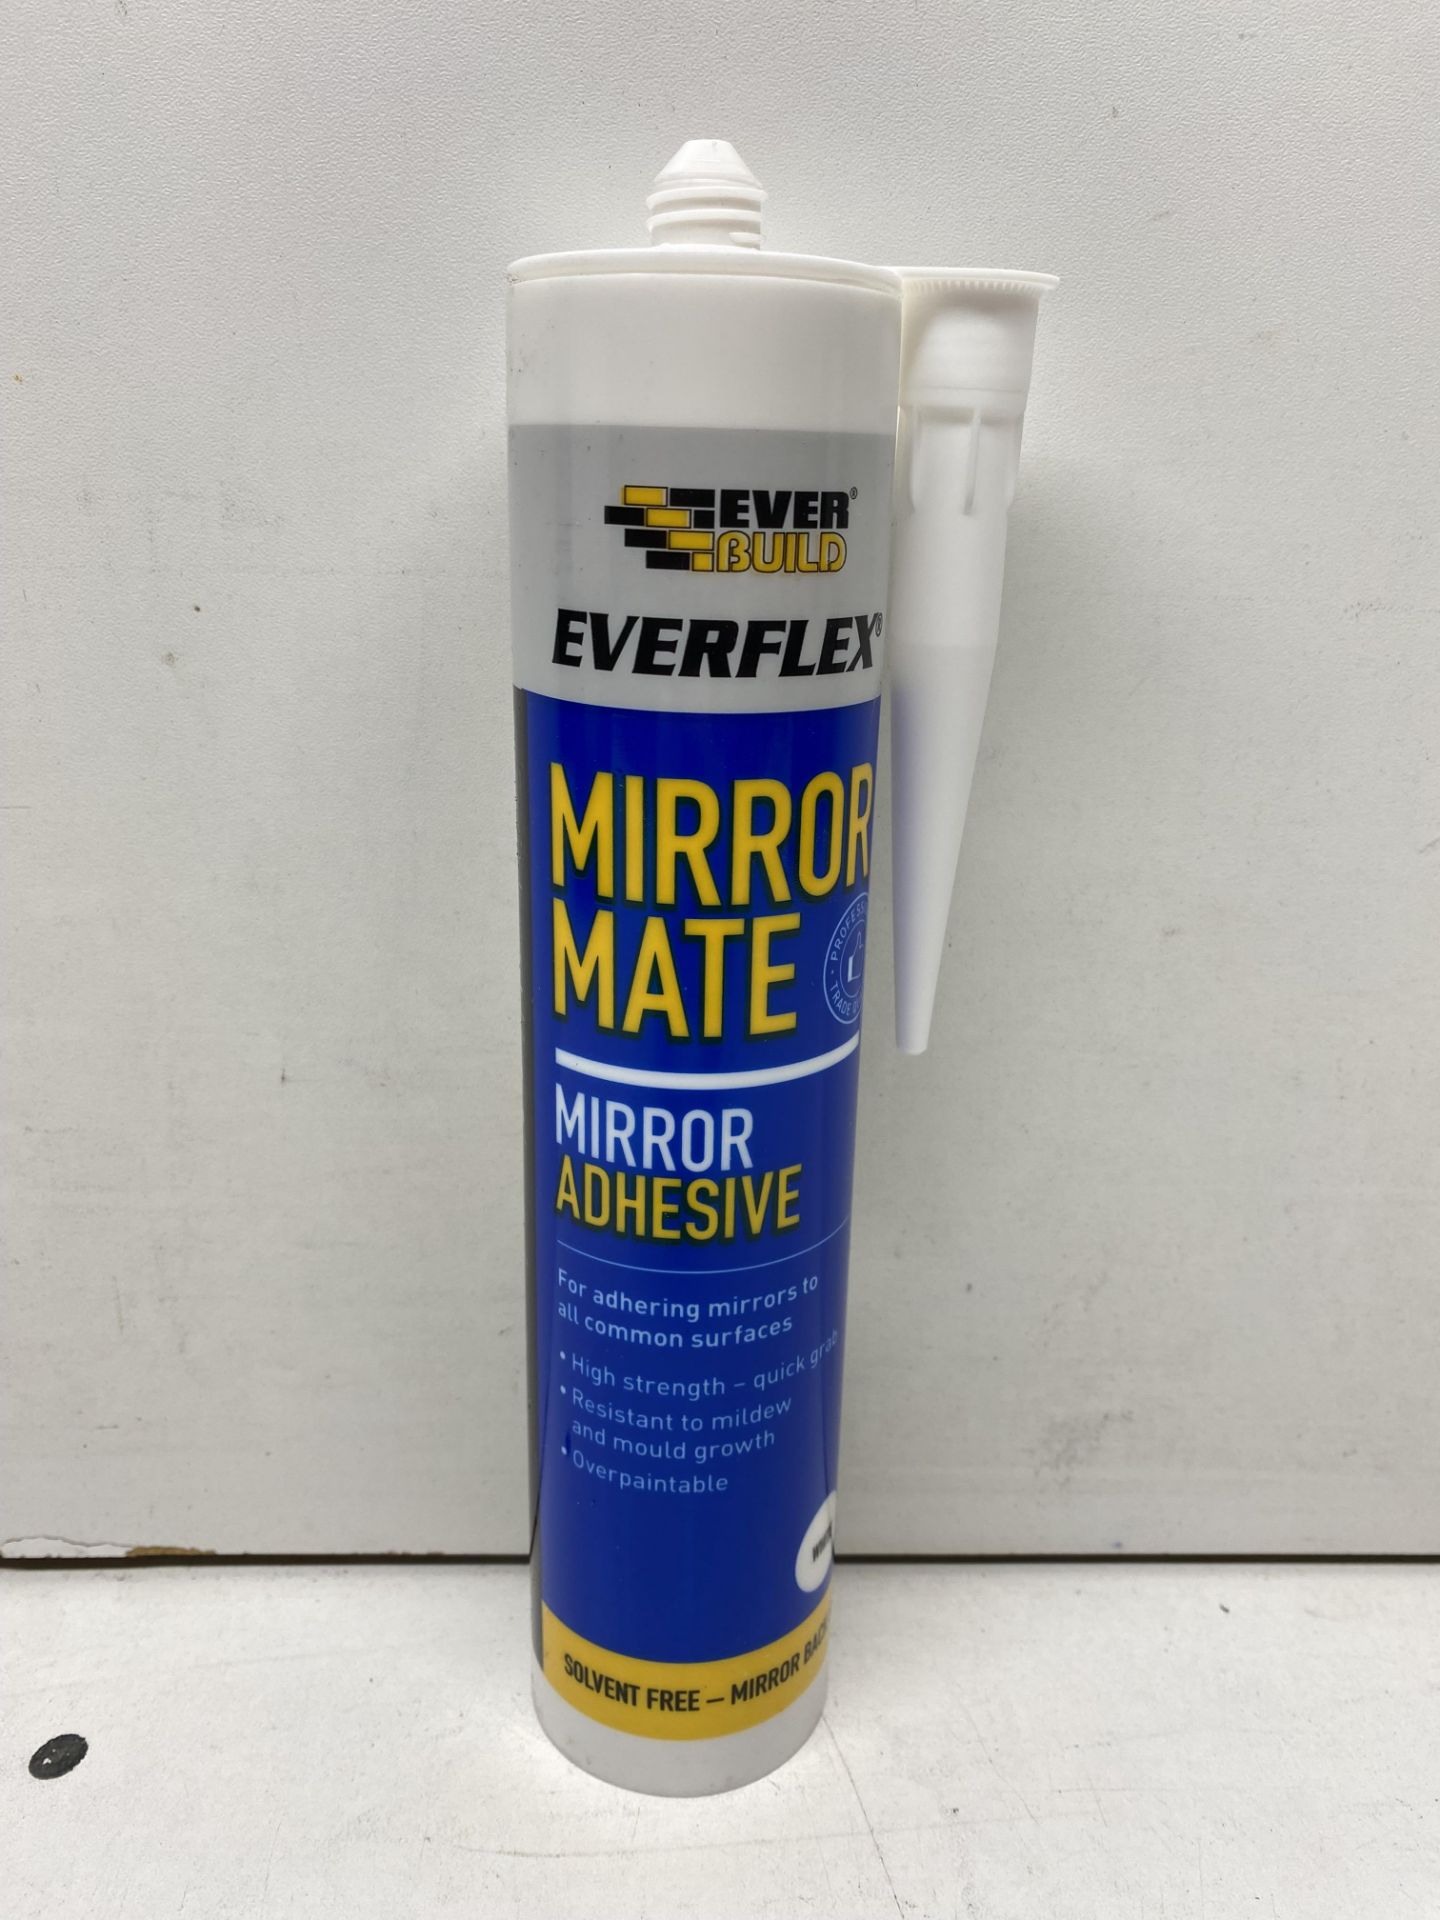 24 x Everbuild Mirror Mate Sealant & Adhesive 290ml EVBMIRROR - See Description For MAN Date